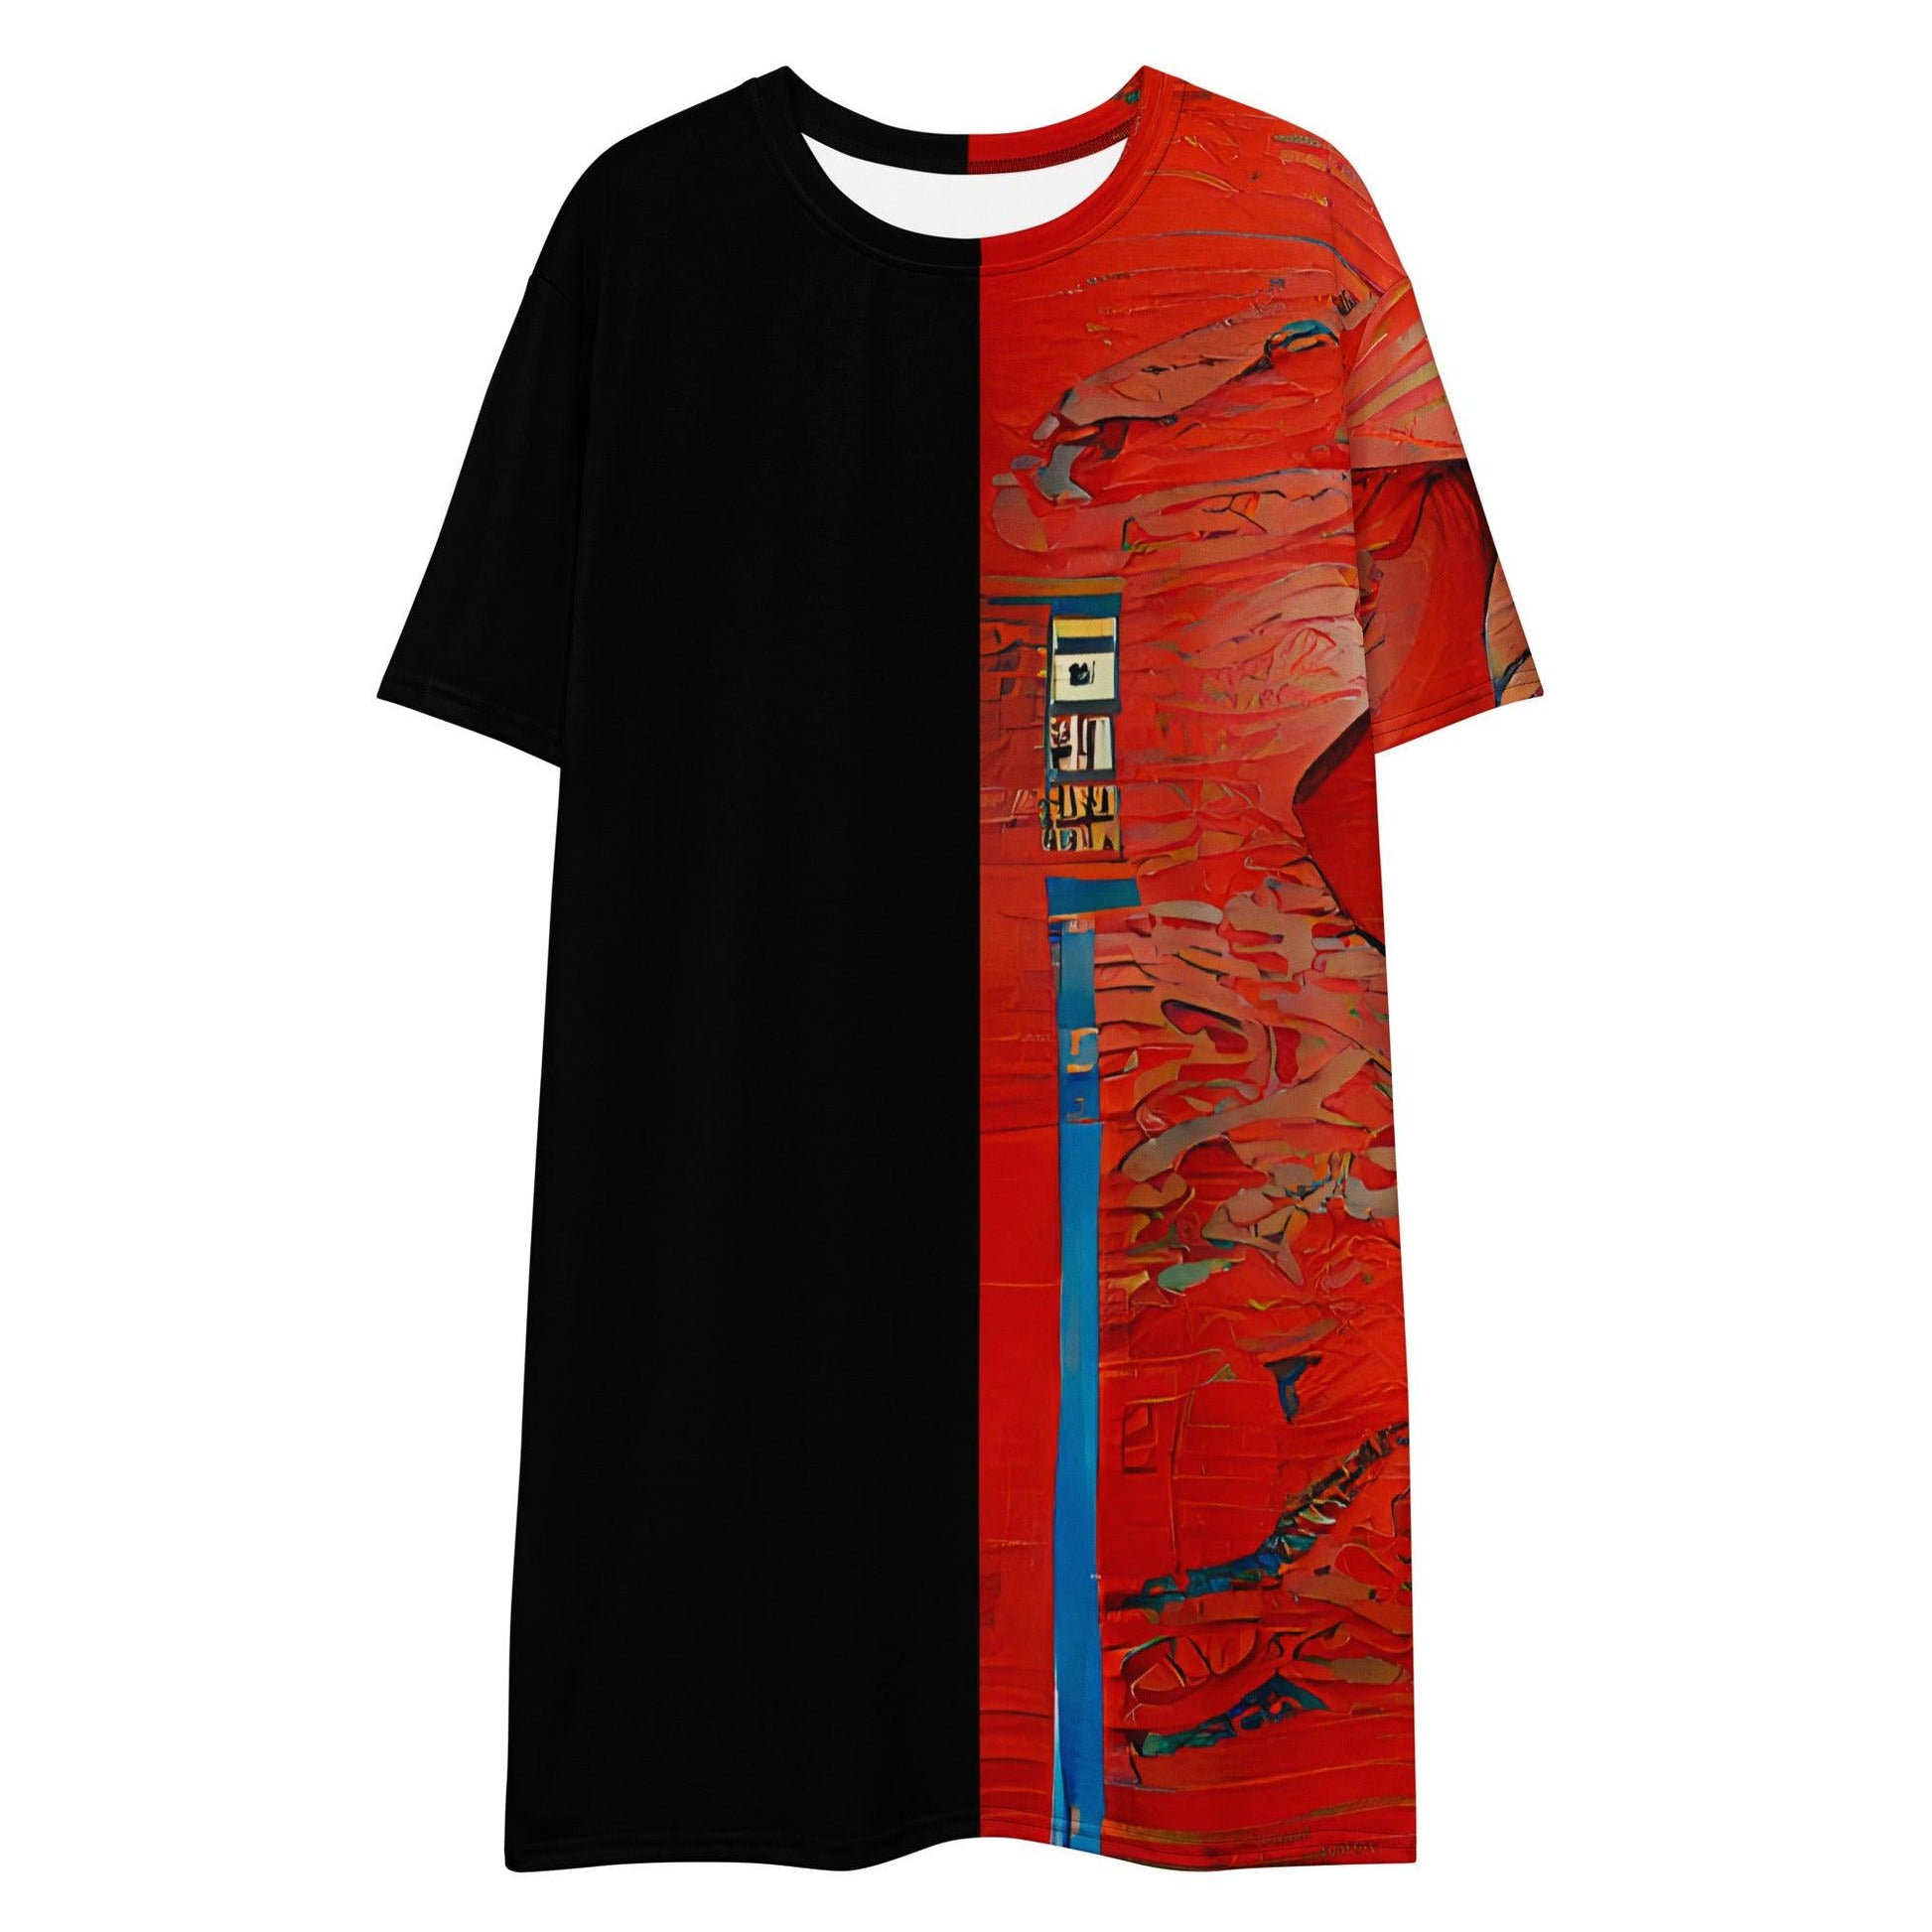 Half Black Half Honghai - Womens T-Shirt Dress - iSAW Company